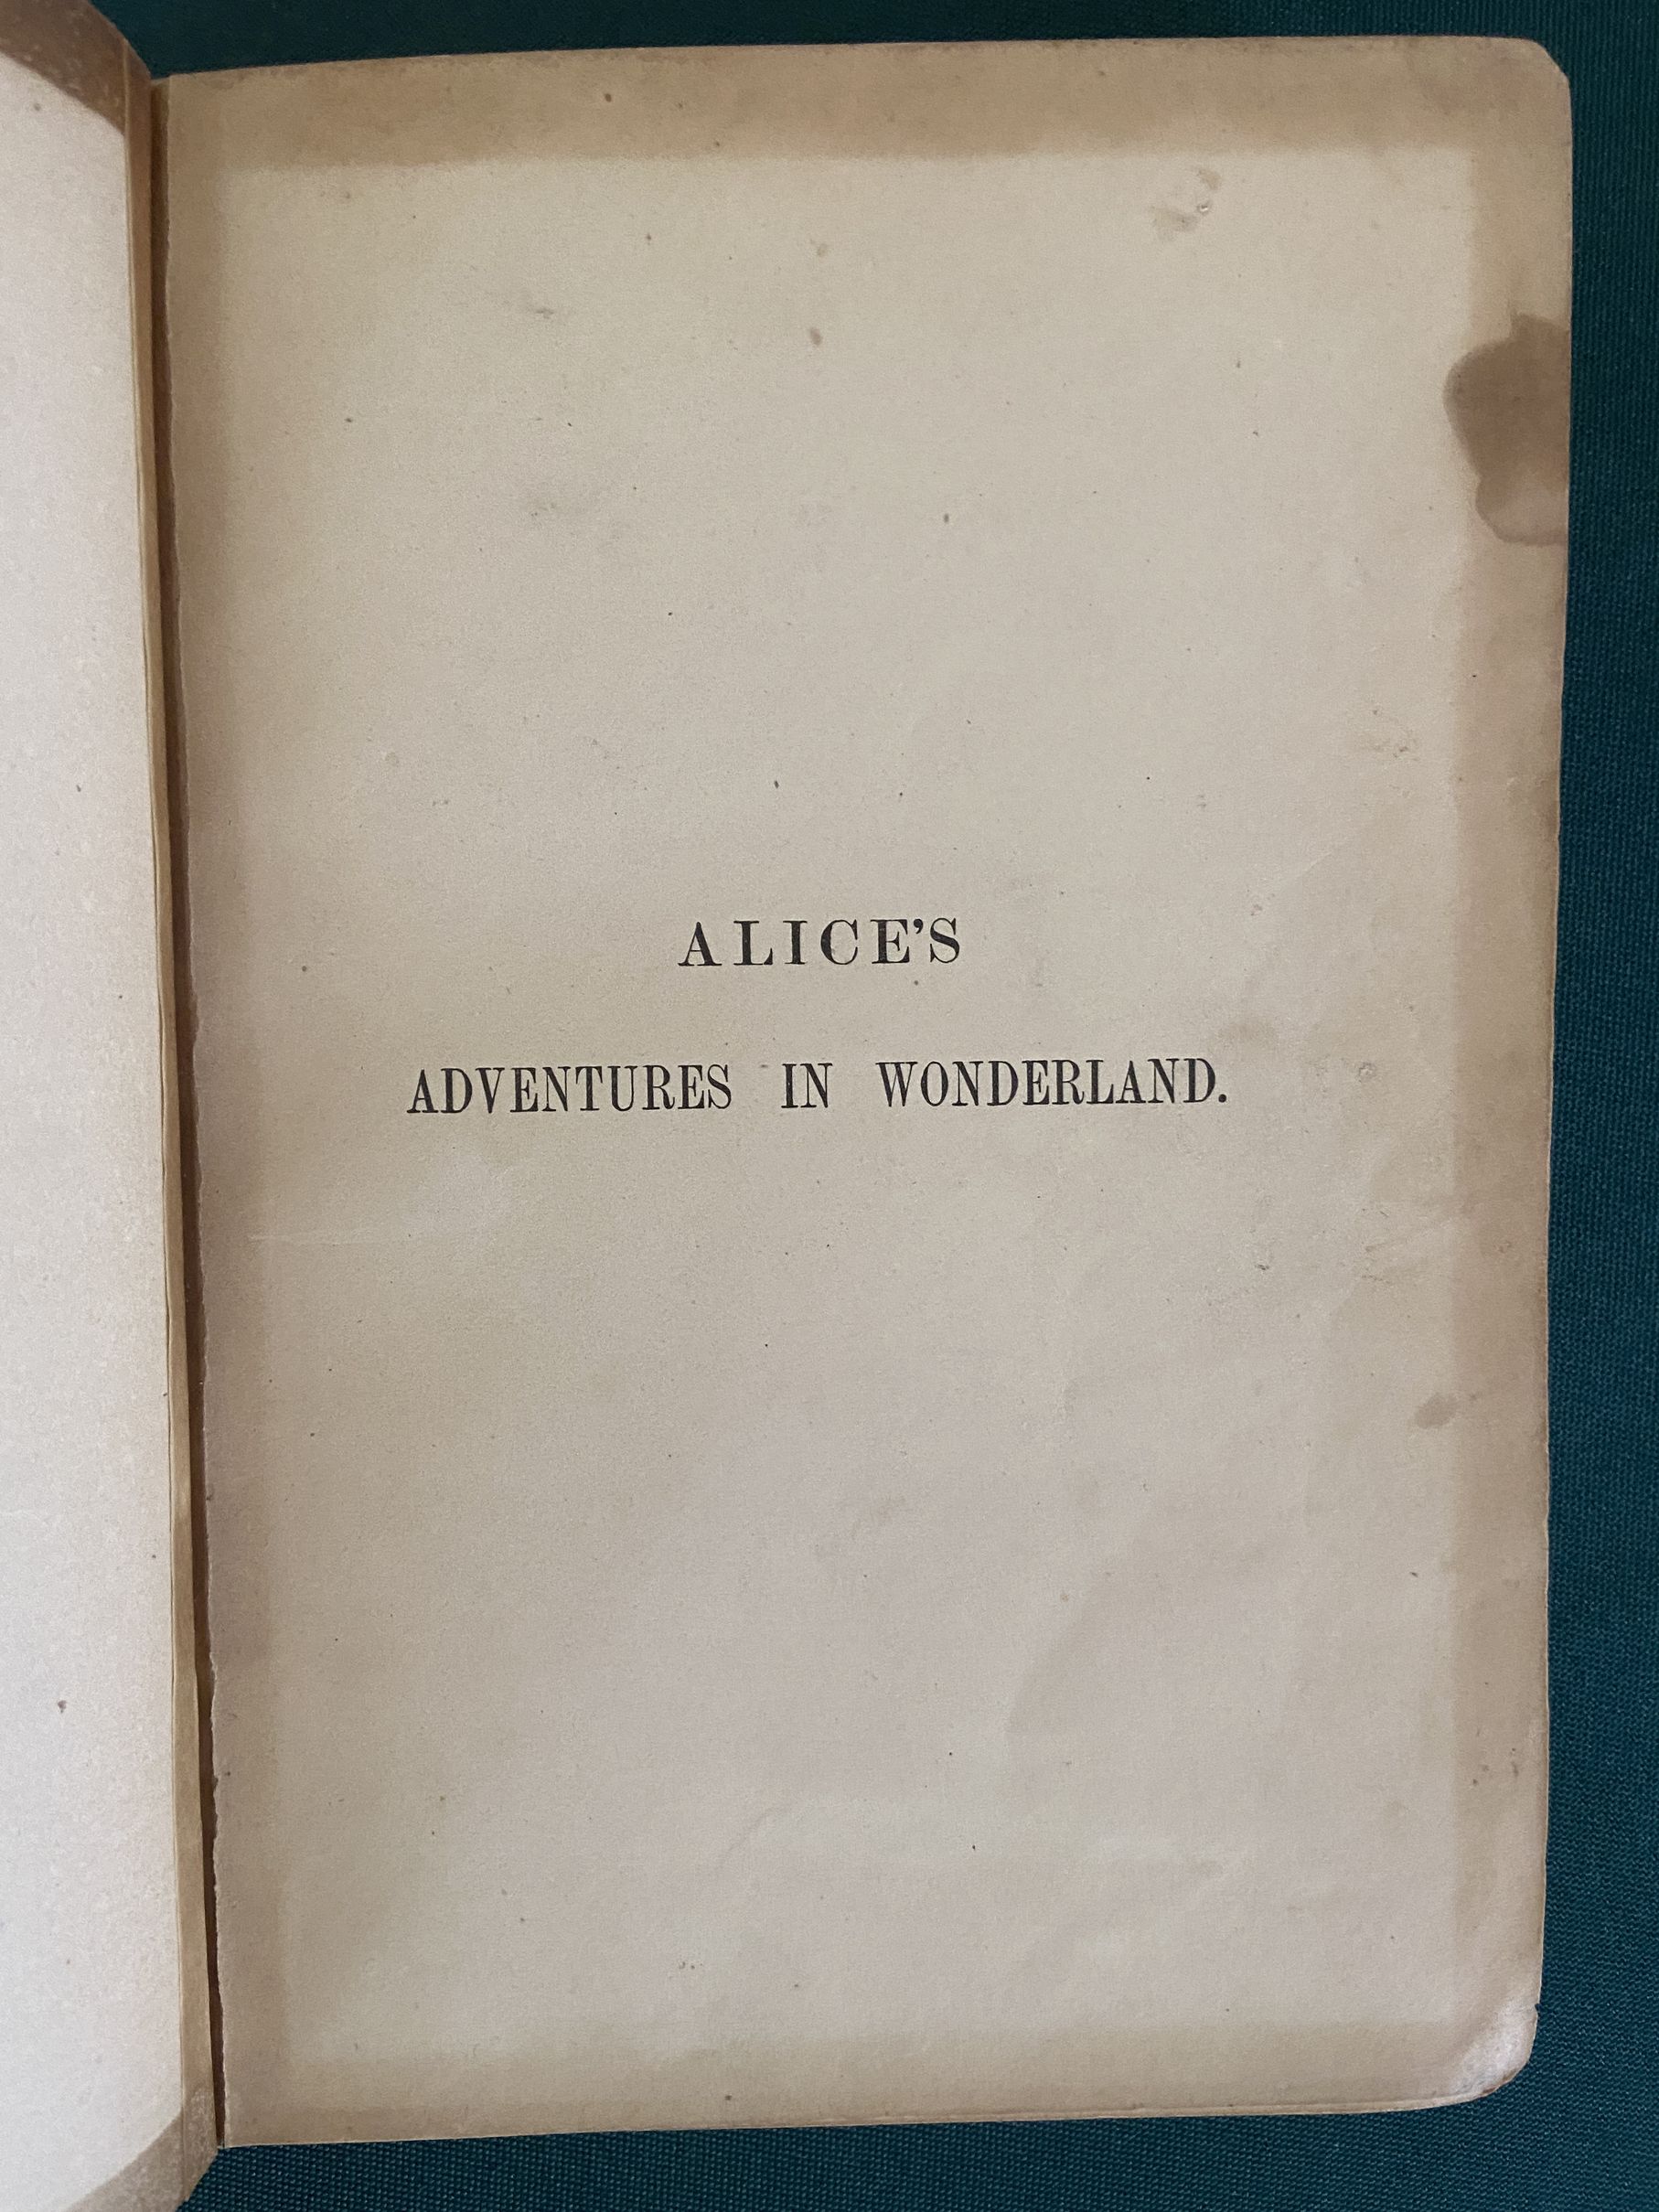 Offerta! Alice in Wonderland – Replica edition 1869 Lee & Shepard  (english) and 1872 Macmillan (italian) – Lewis Carroll